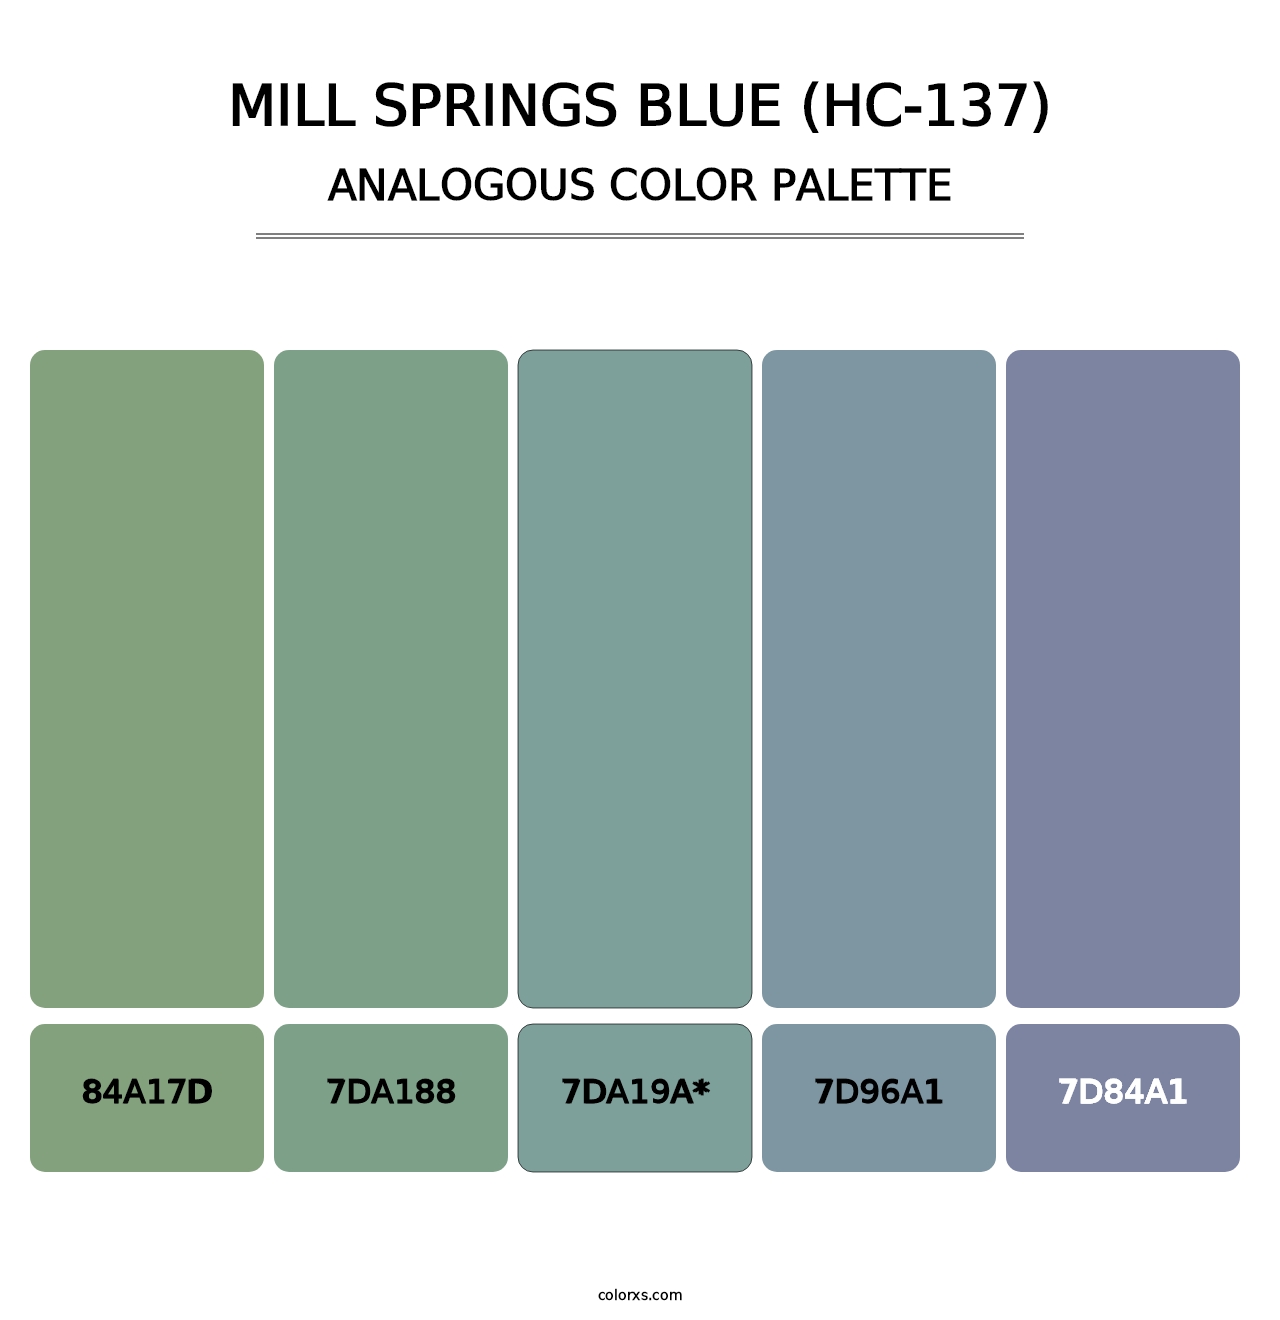 Mill Springs Blue (HC-137) - Analogous Color Palette